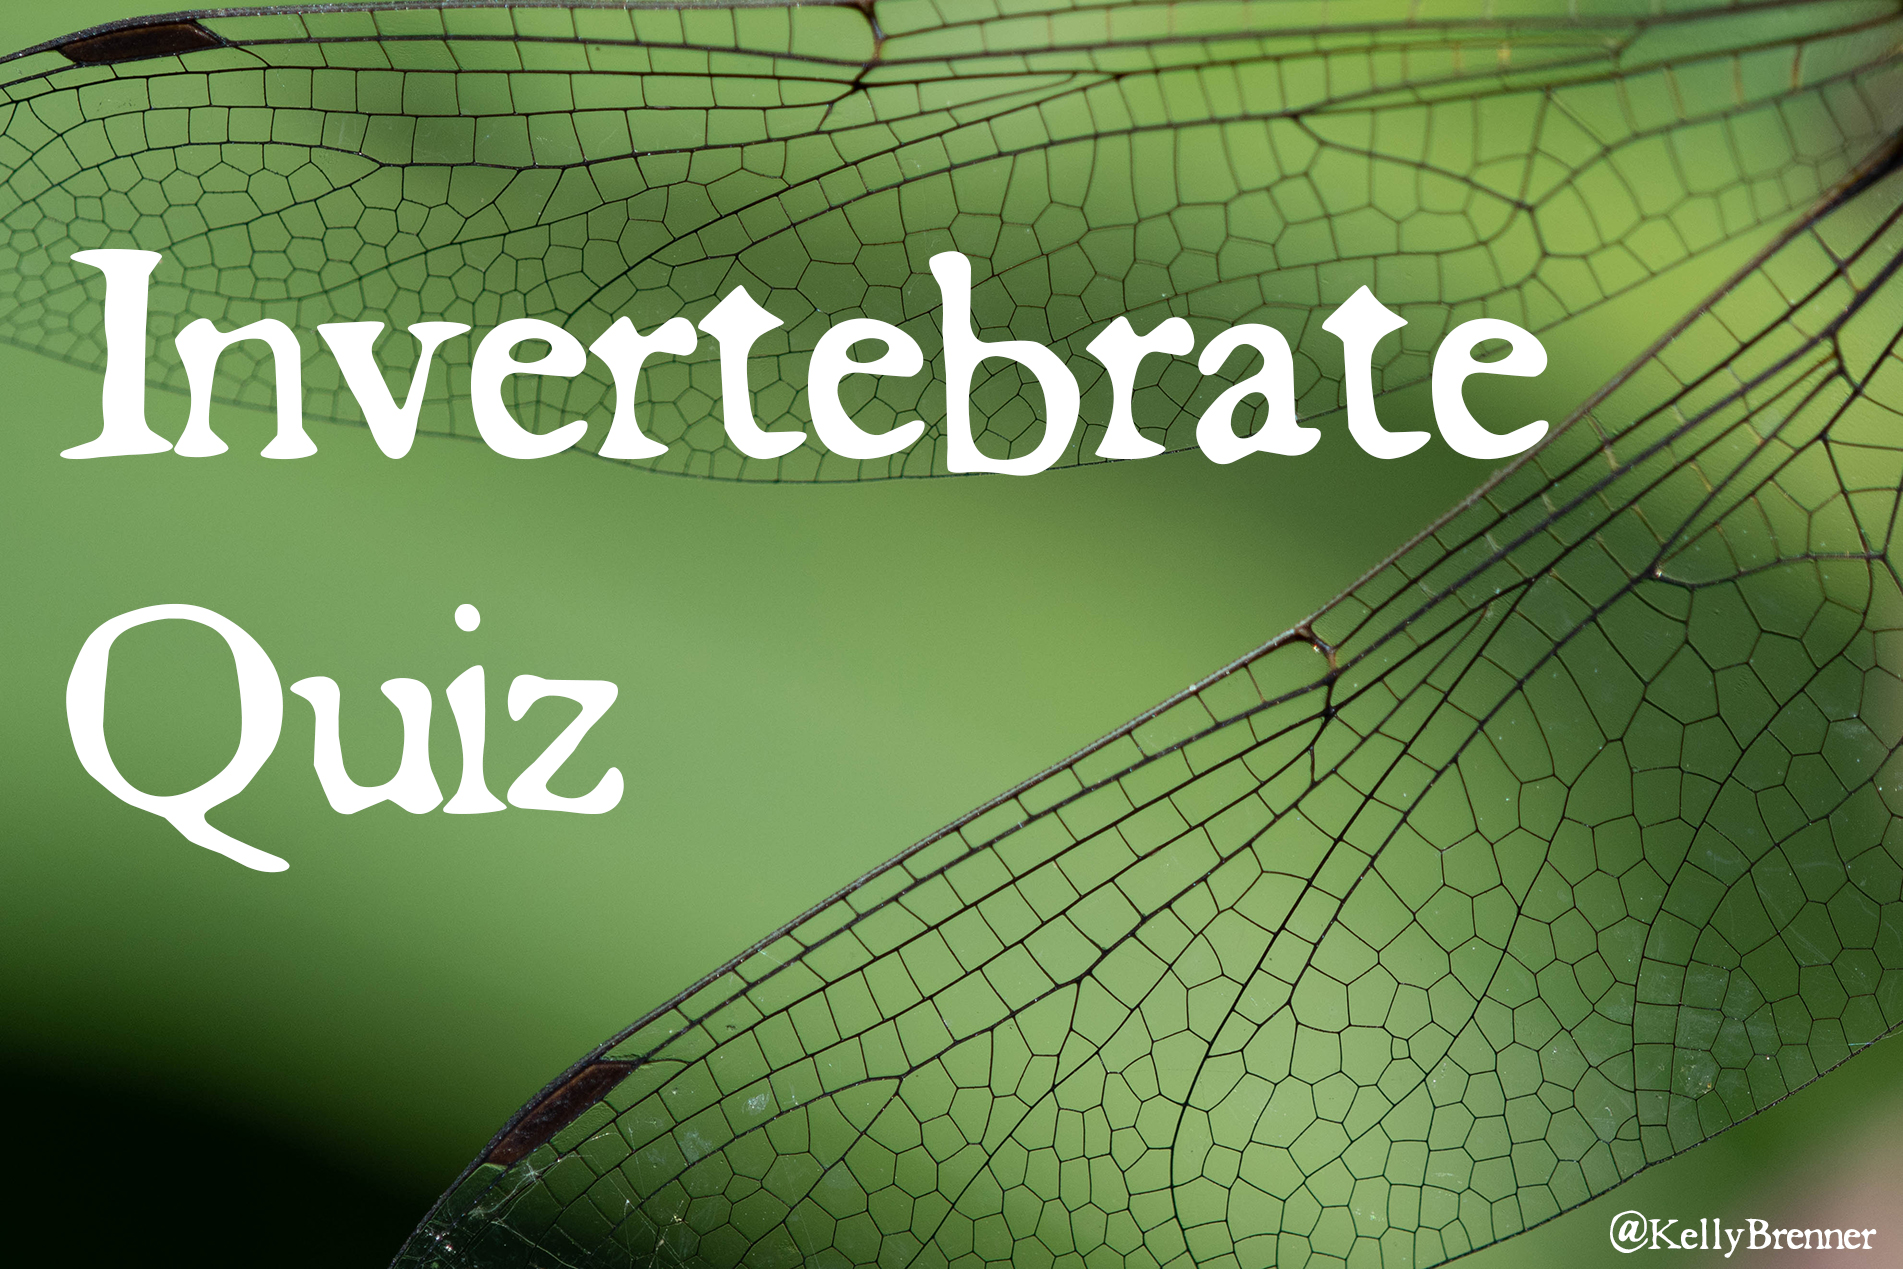 Invertebrate Quiz: Take Flight